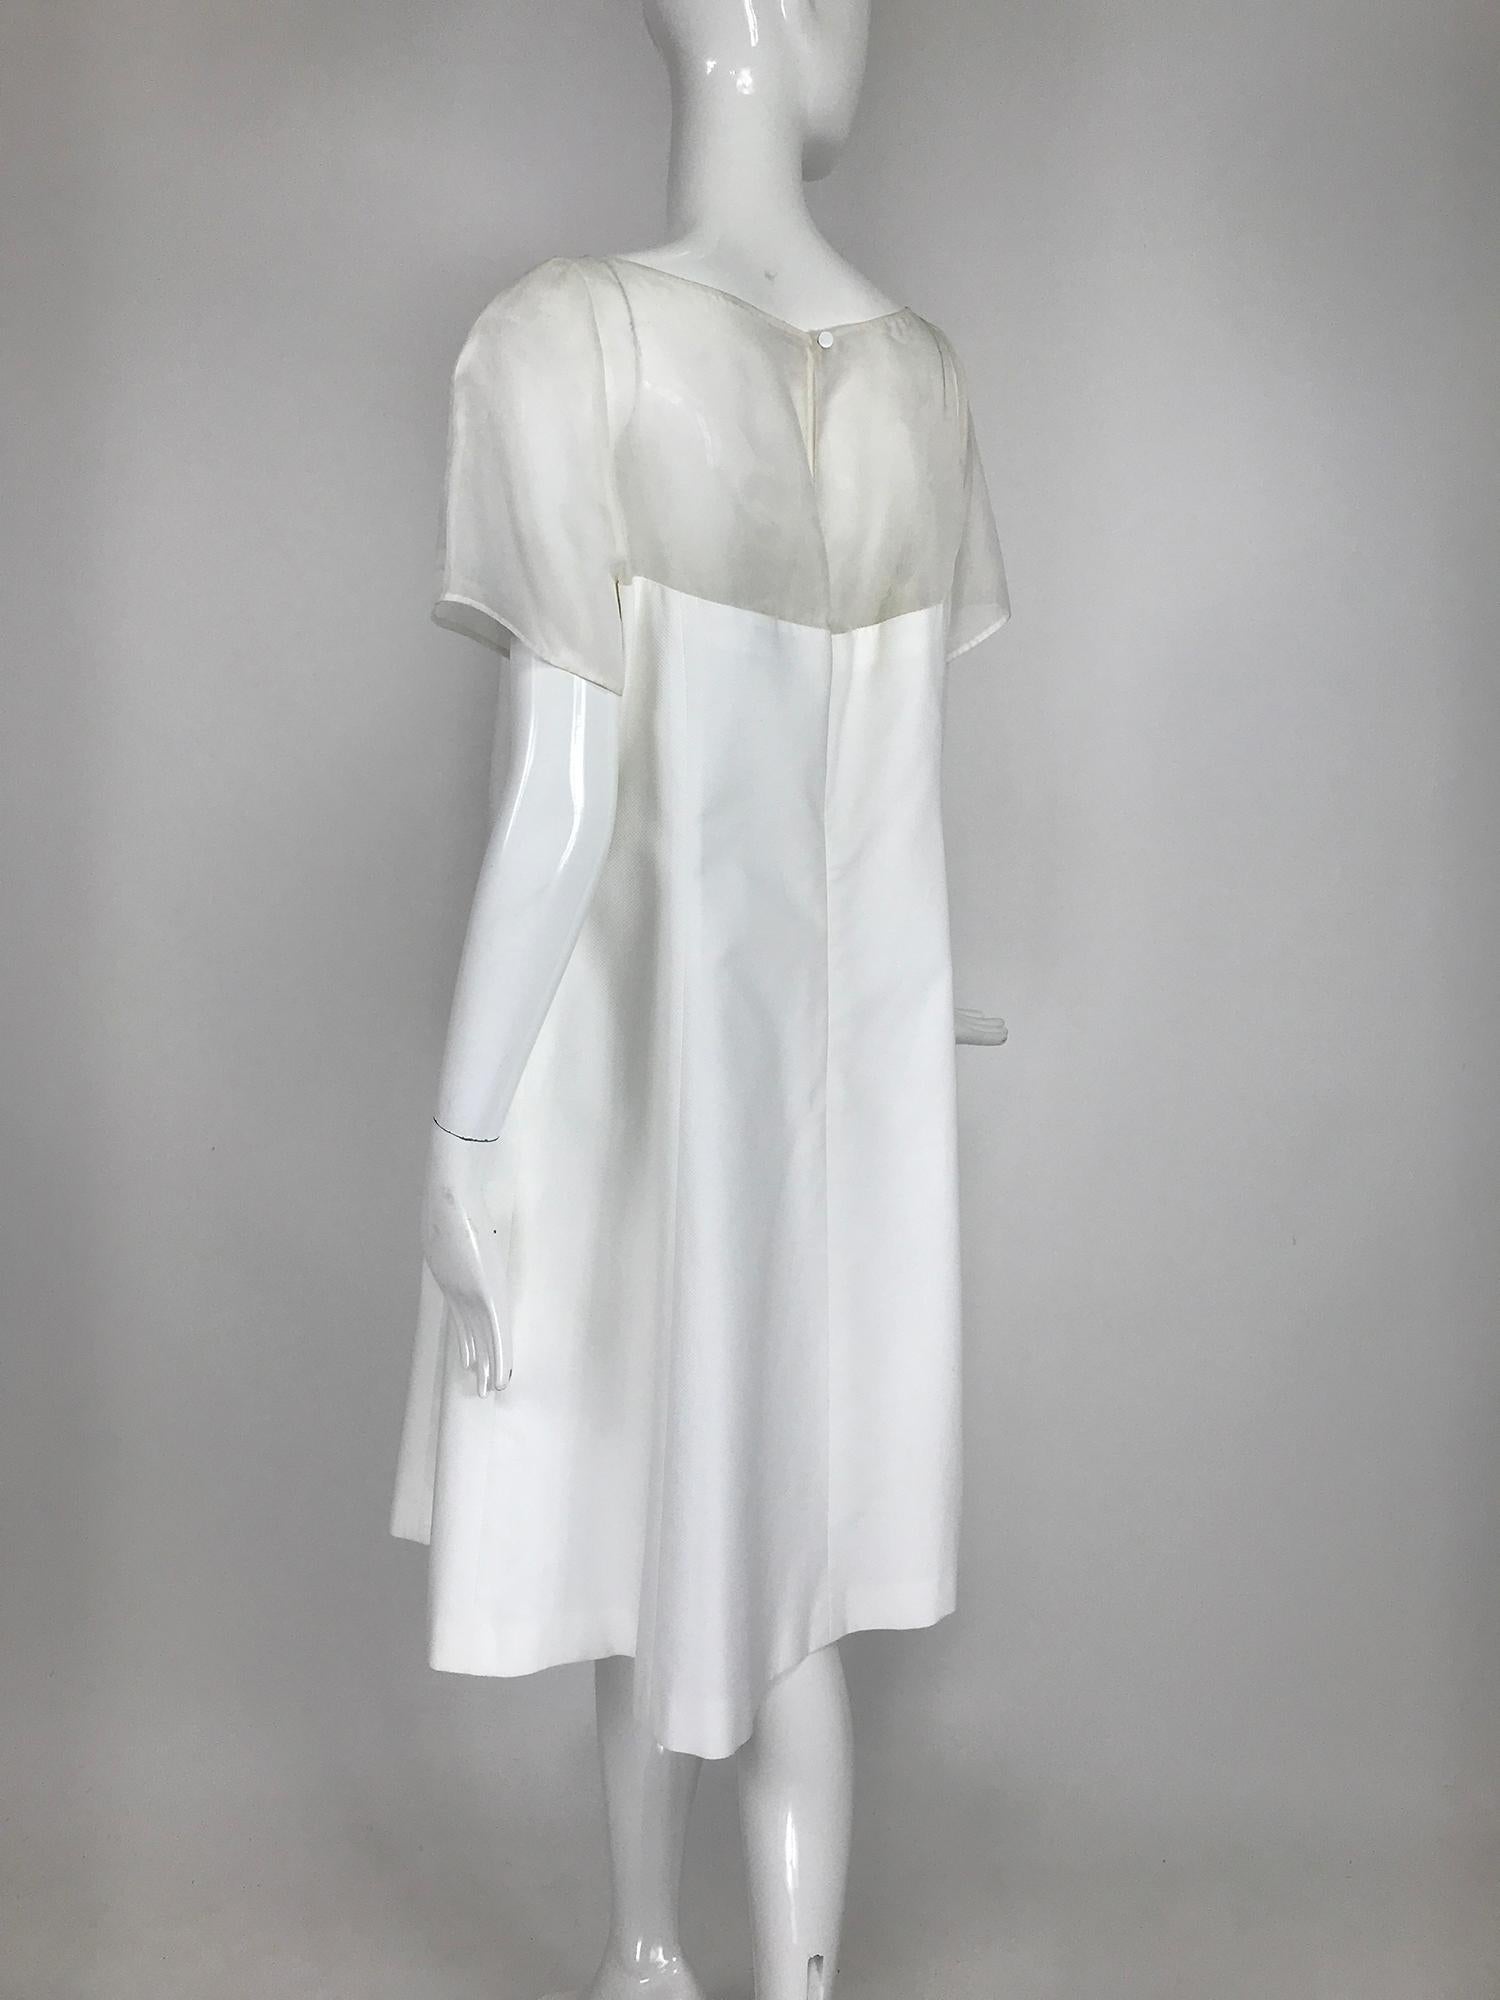 Gray Rena Lange White Pique and Silk Organza Day Dress 14